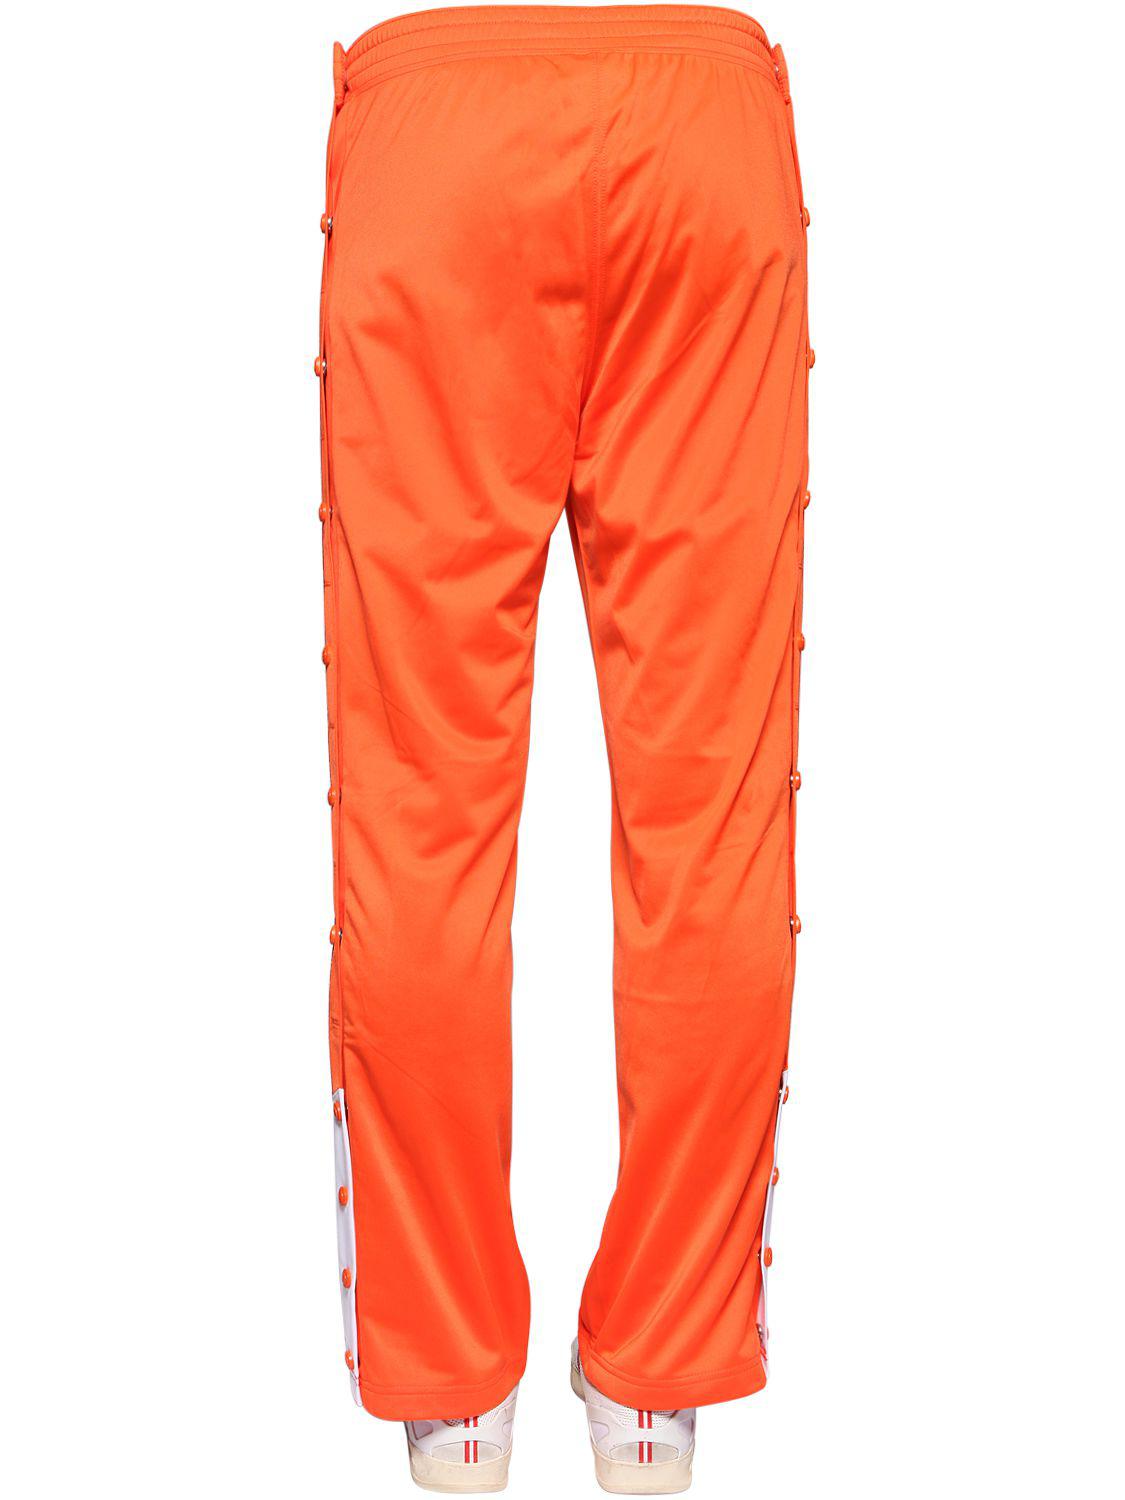 champion orange pants